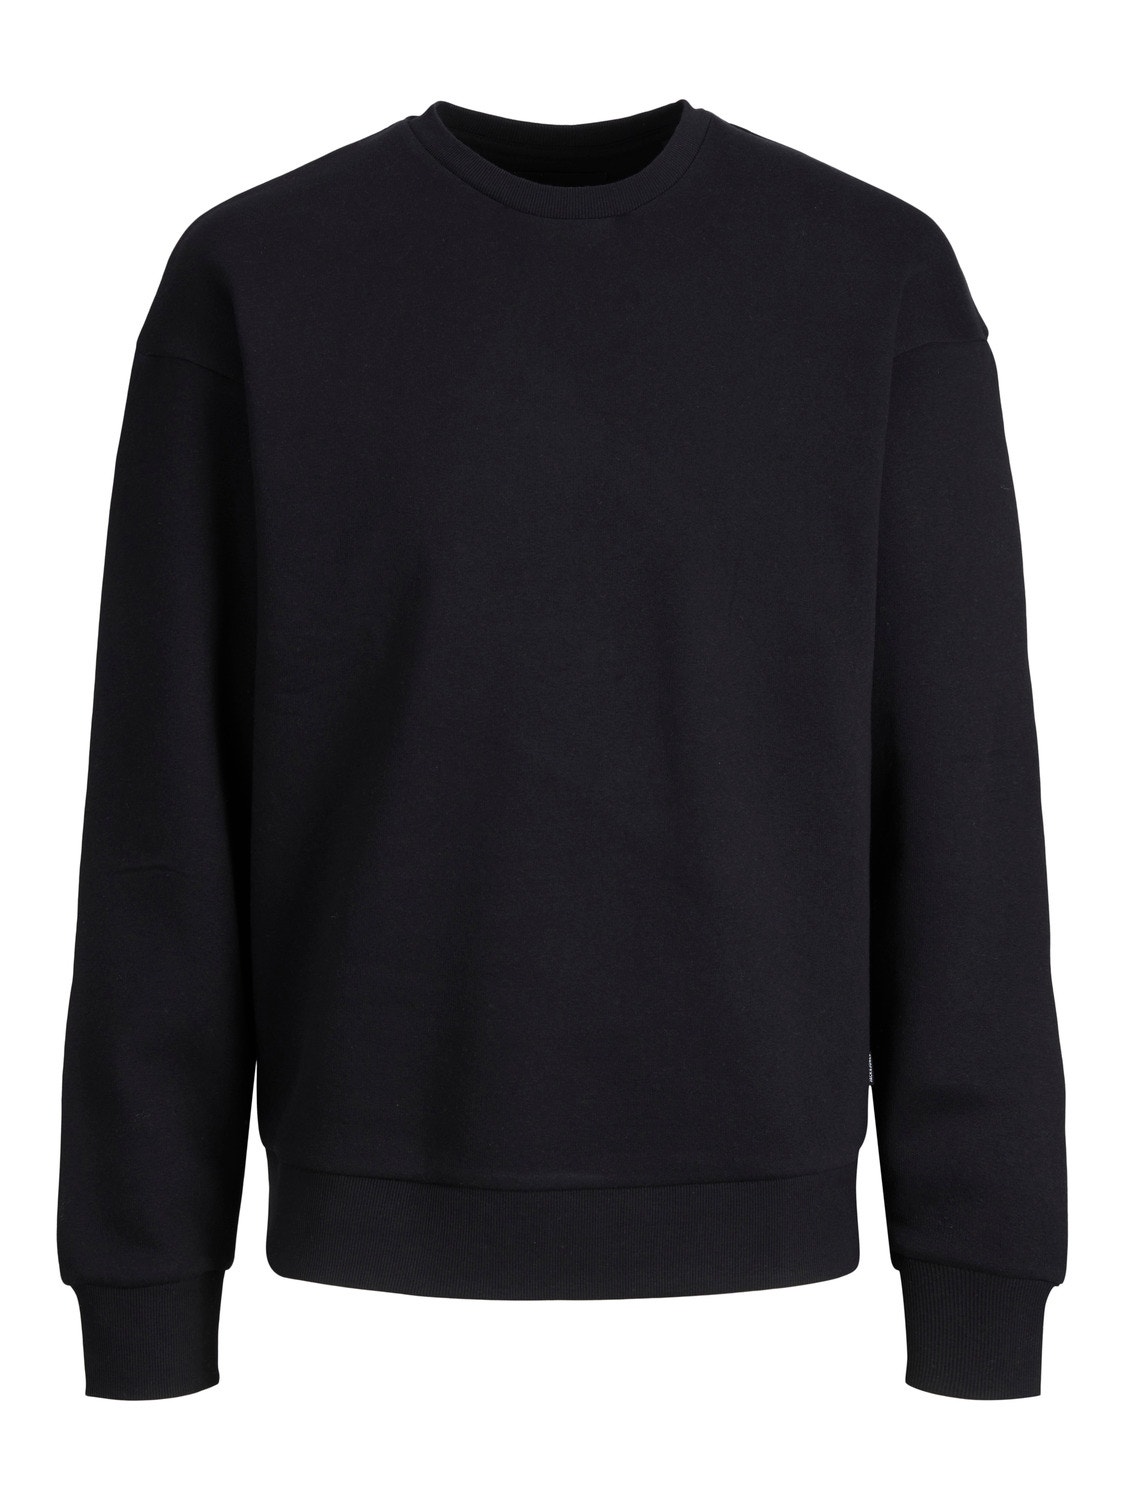 Jack & Jones Plus Size Plain Crew neck Sweatshirt -Black - 12250594